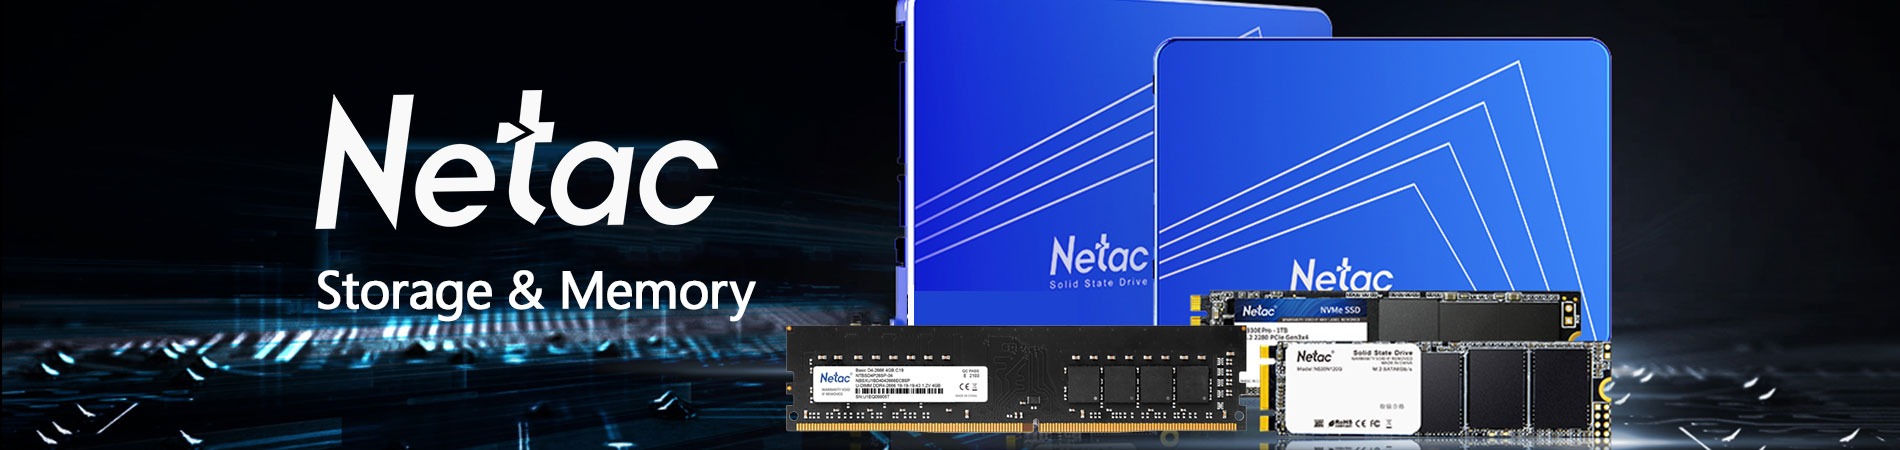 Netac SATA & PCIe NVMe Storage and Memory